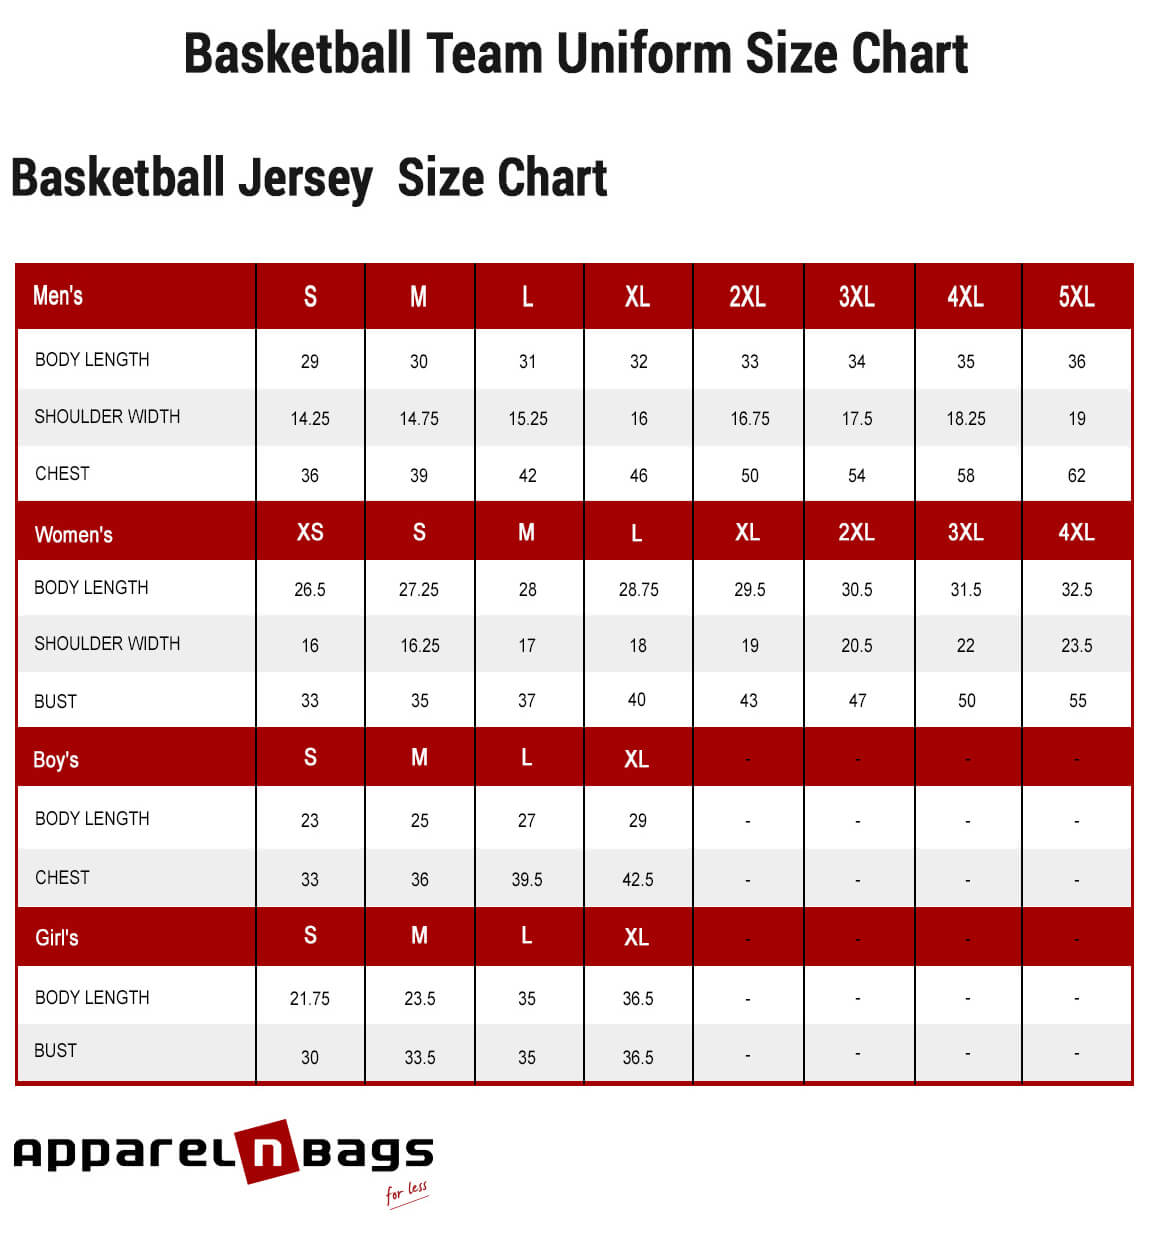 youth large jersey size chart